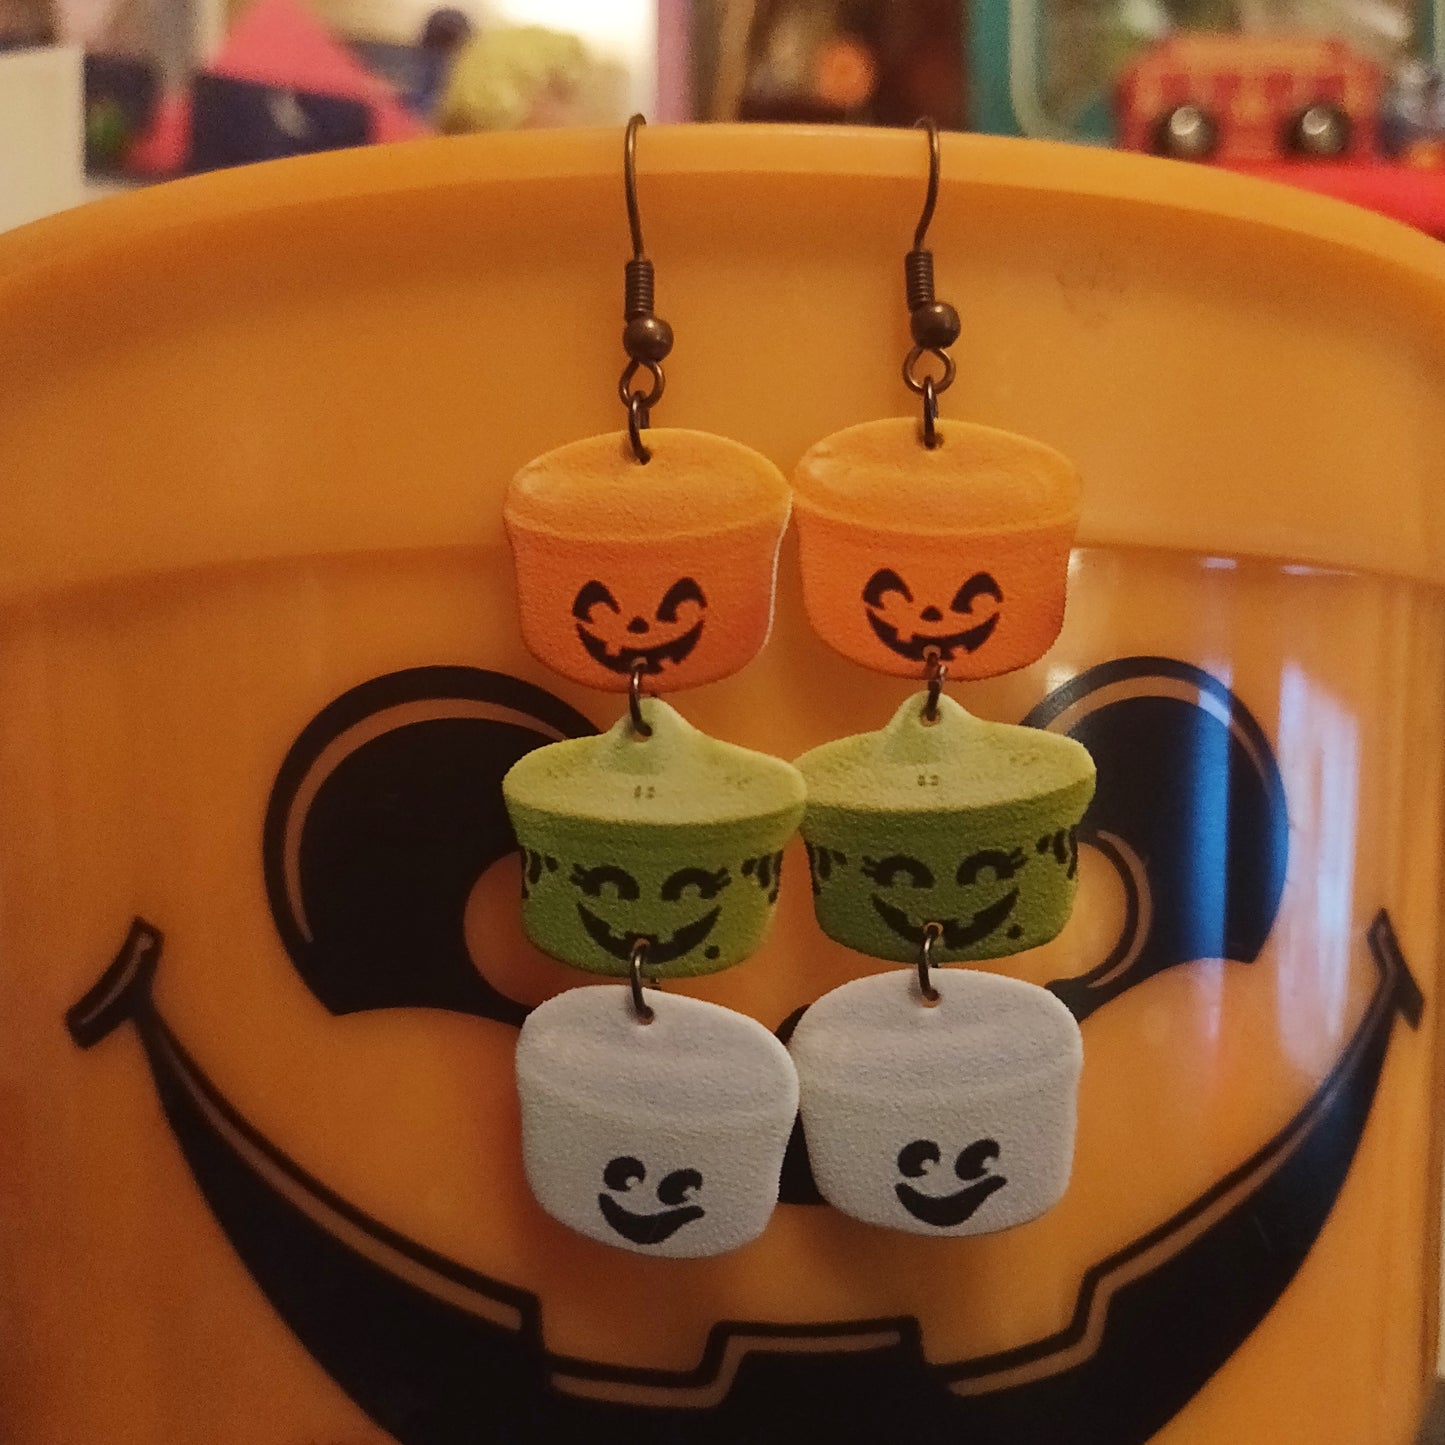 Halloween Boo Pails NECKLACE / EARRINGS